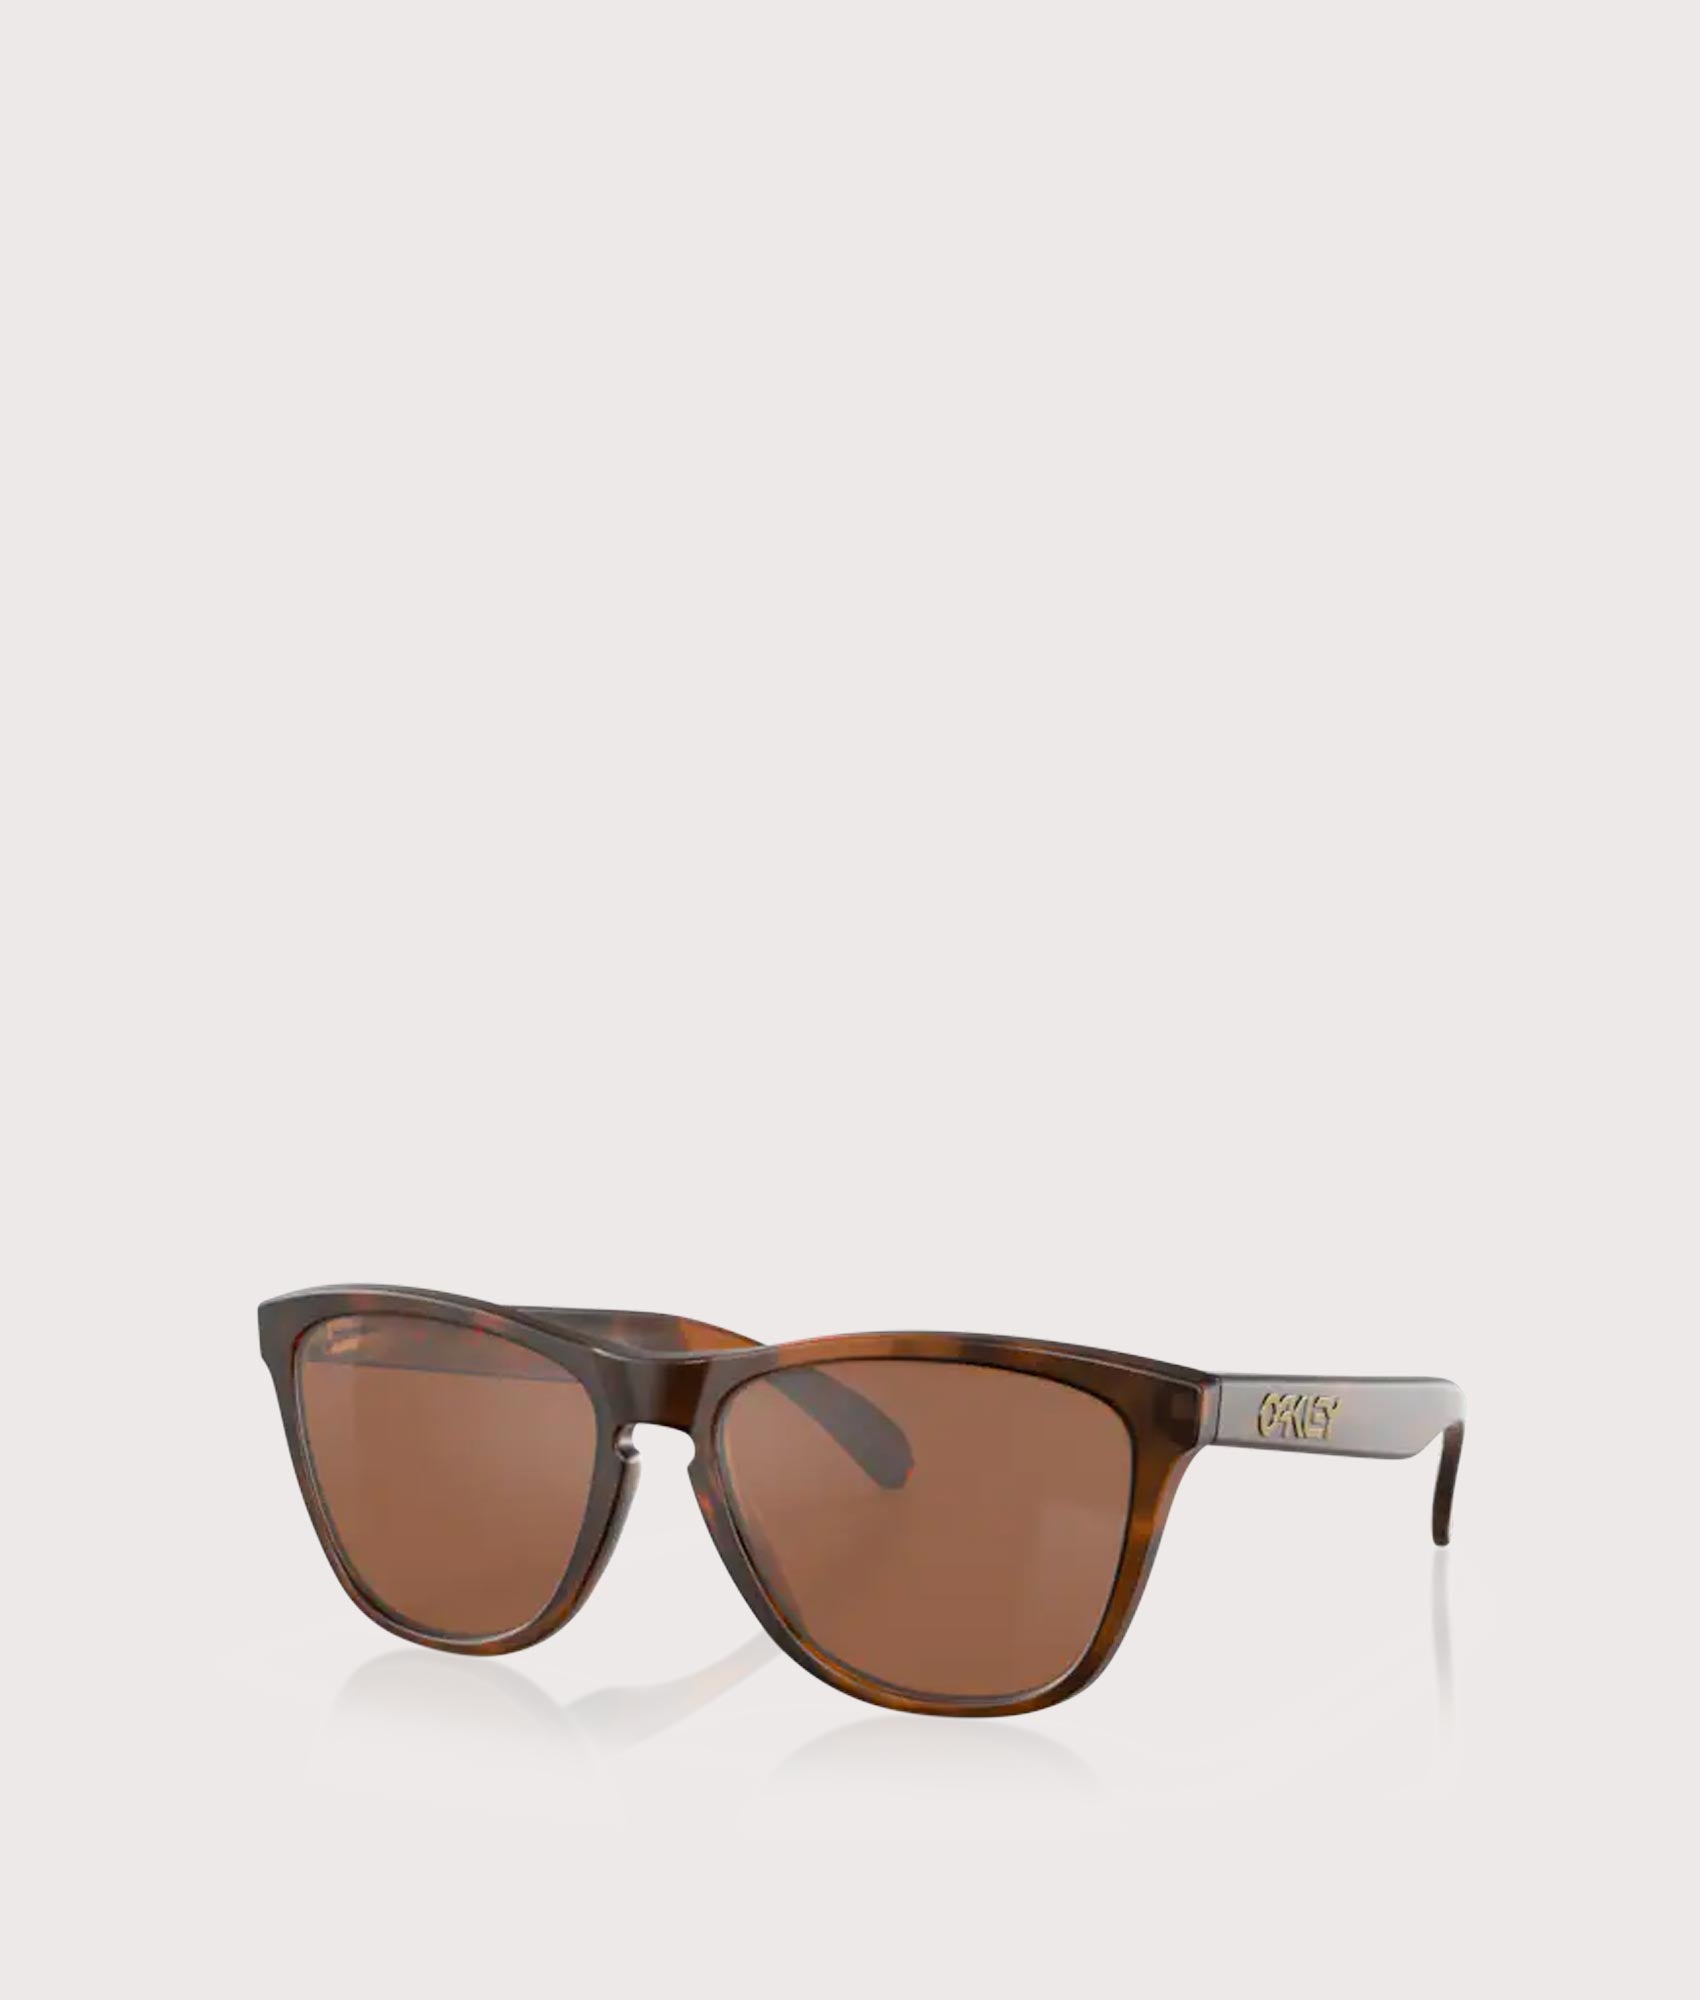 Oakley Mens Frogskins Sunglasses - Colour: 9013C5 Matte Brown Tortoise - Size: 55